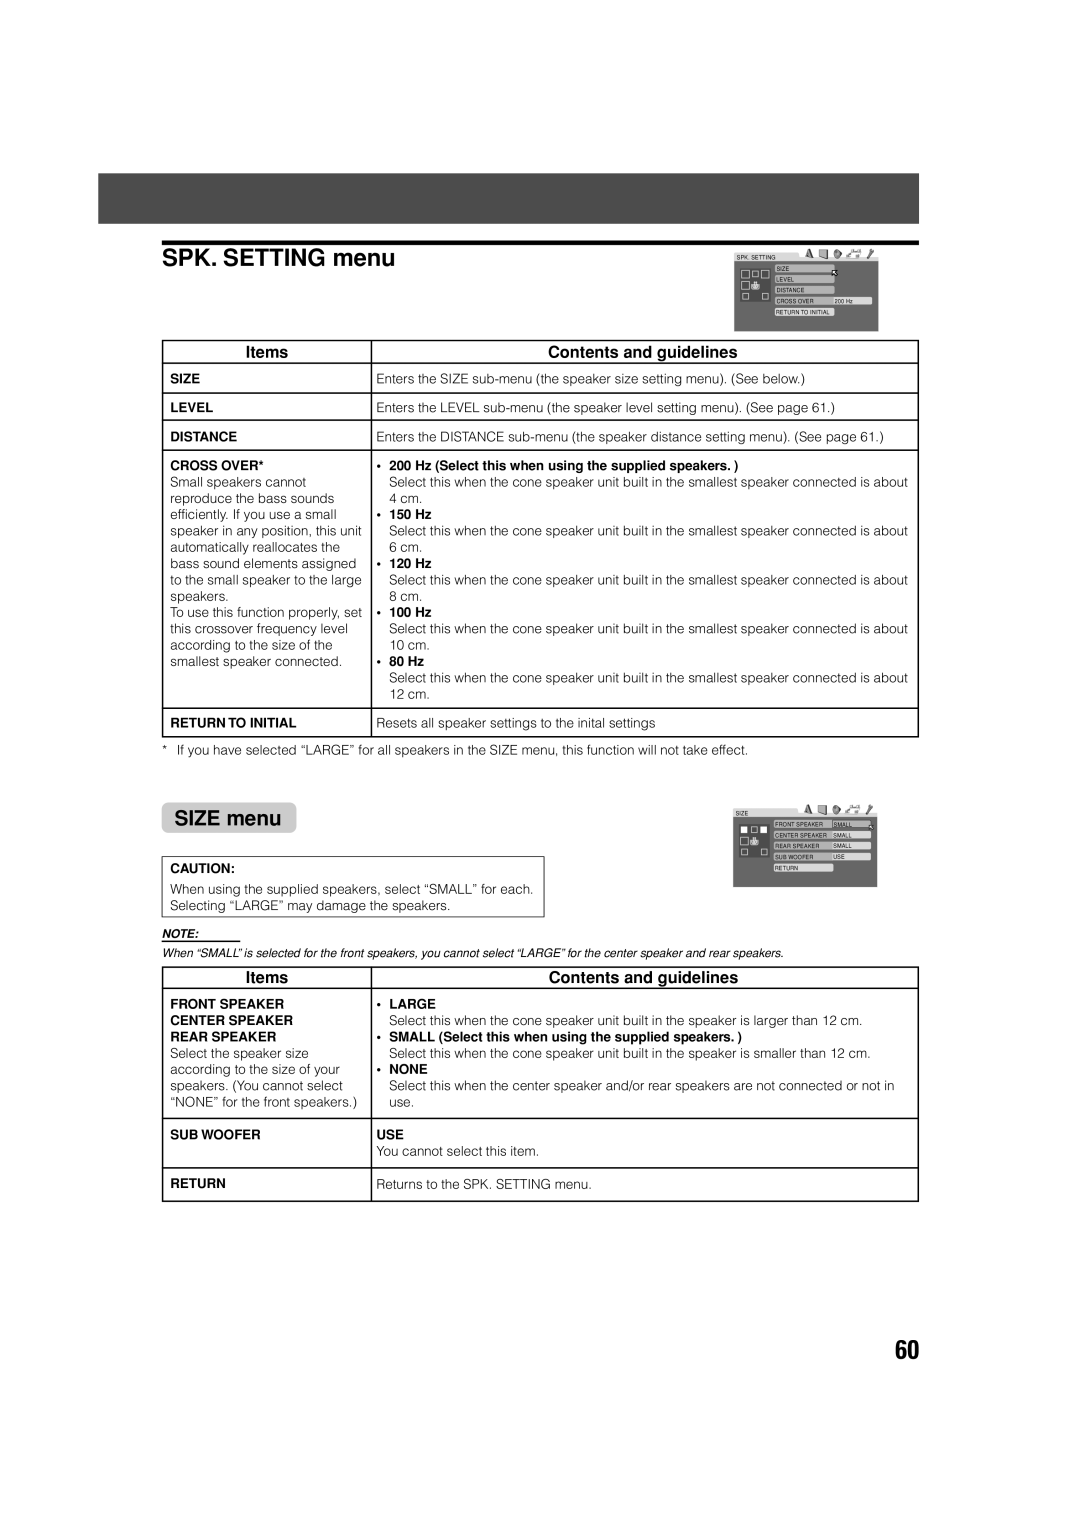 JVC SP-PWV70, SP-XSV70 manual SPK. SETTING menu, SIZE menu, Items, Contents and guidelines 